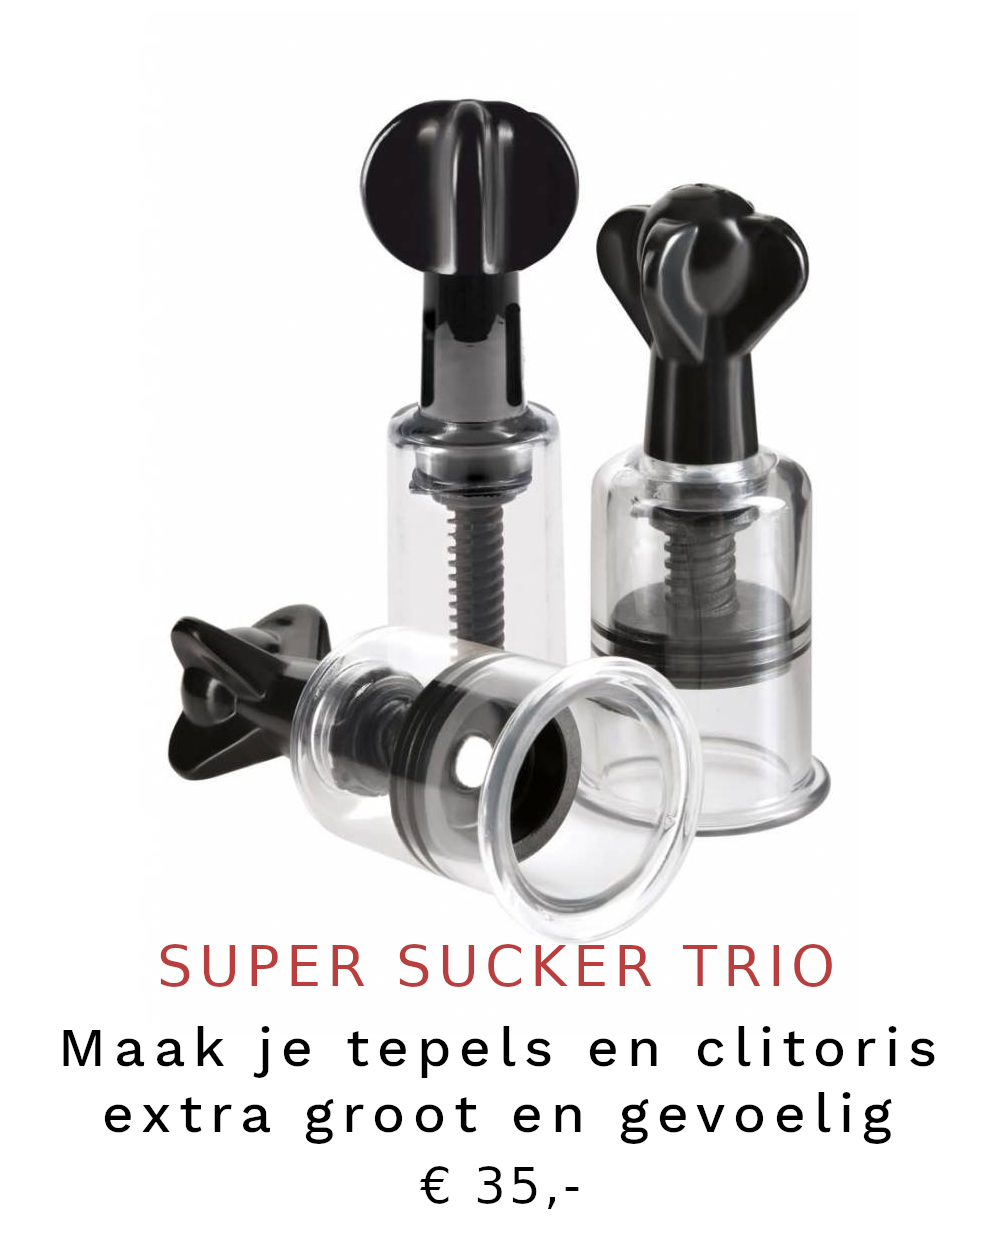 Super sucker trio